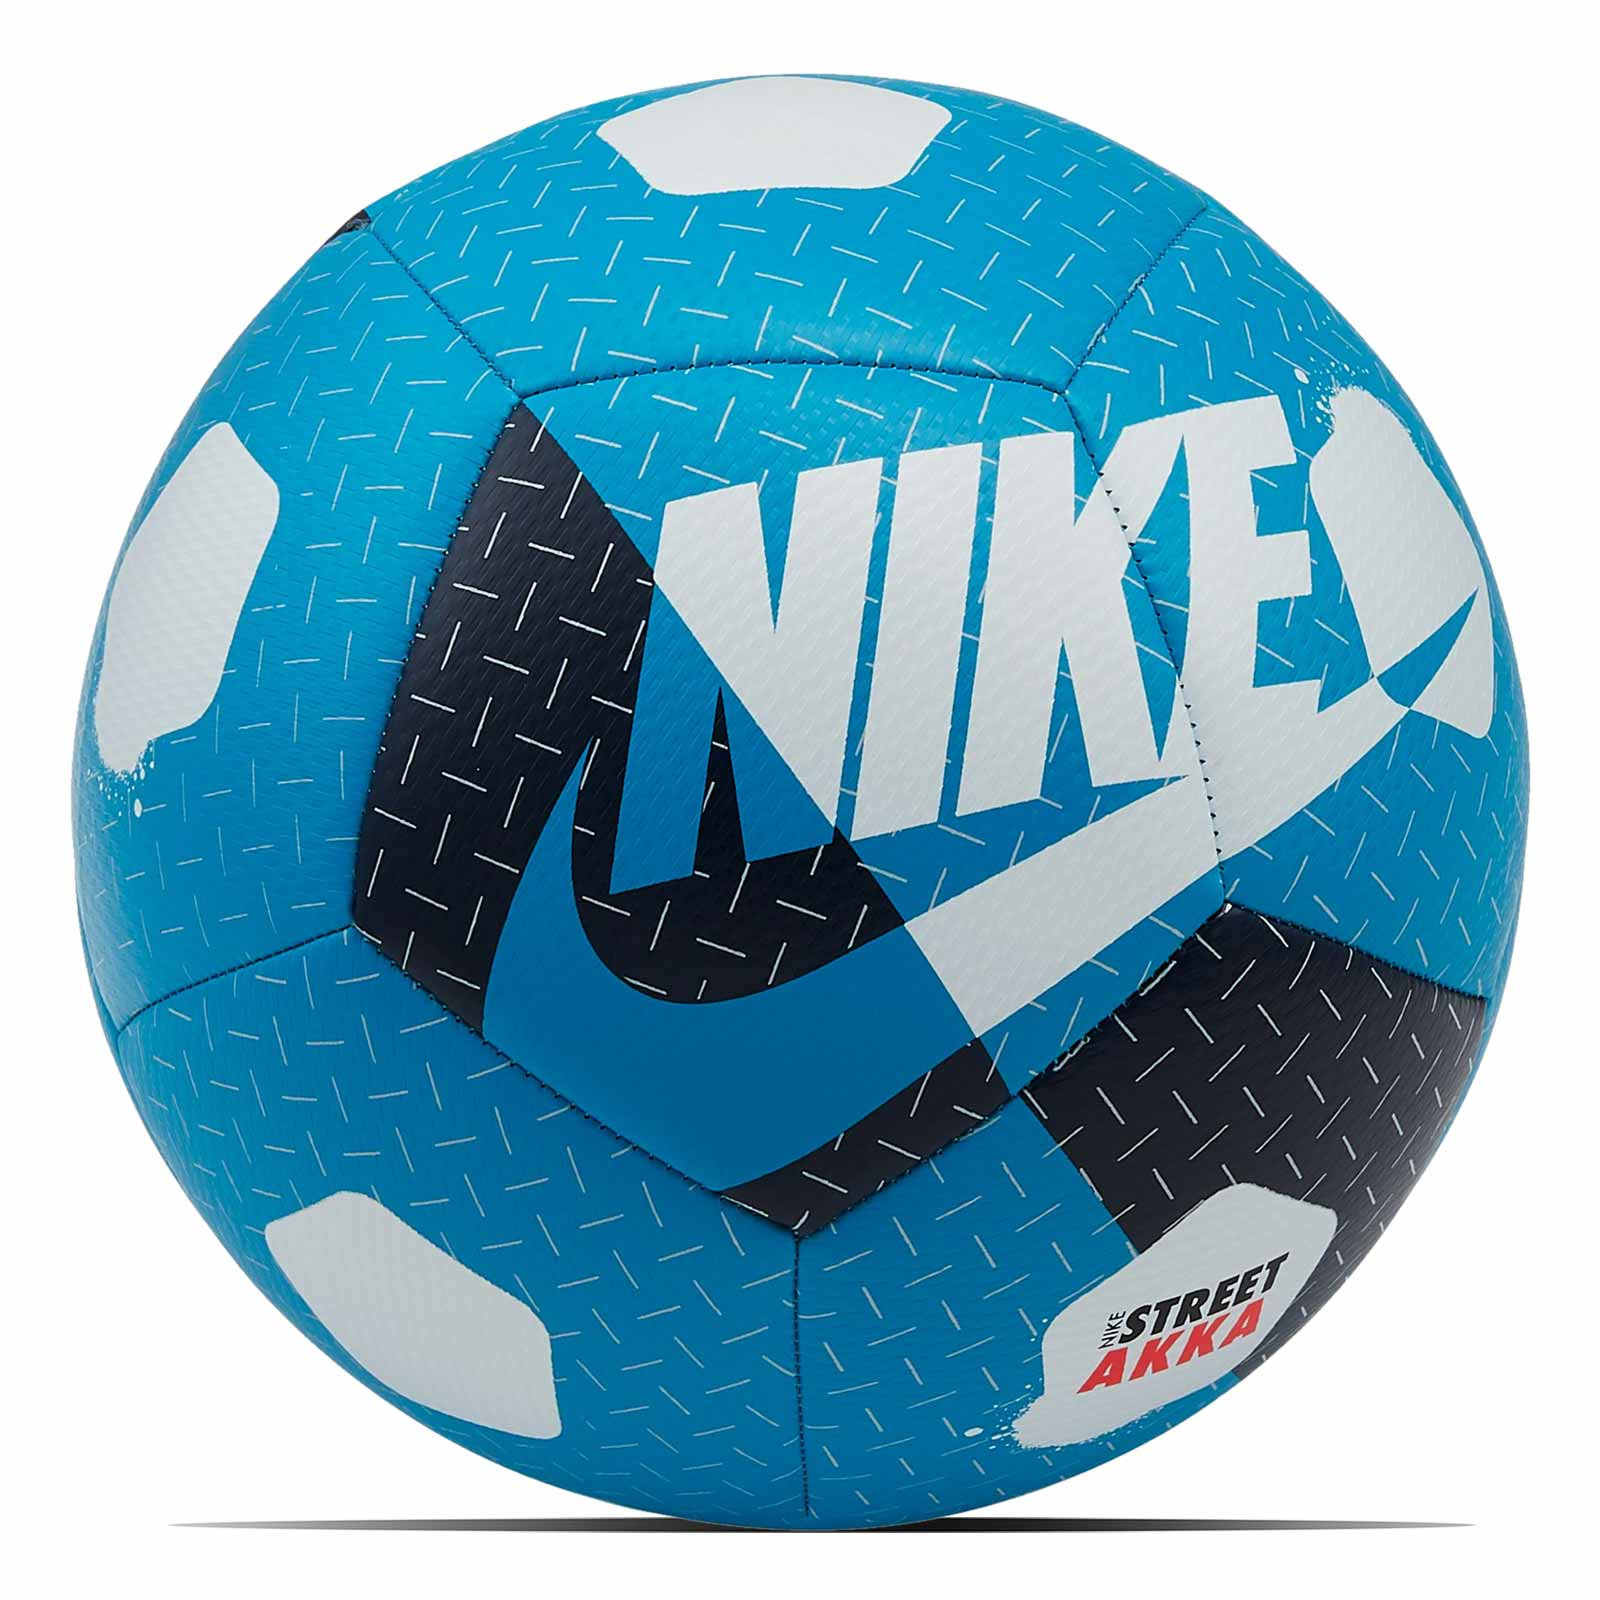 Nike Street Akka talla 62 cm azul | futbolmania